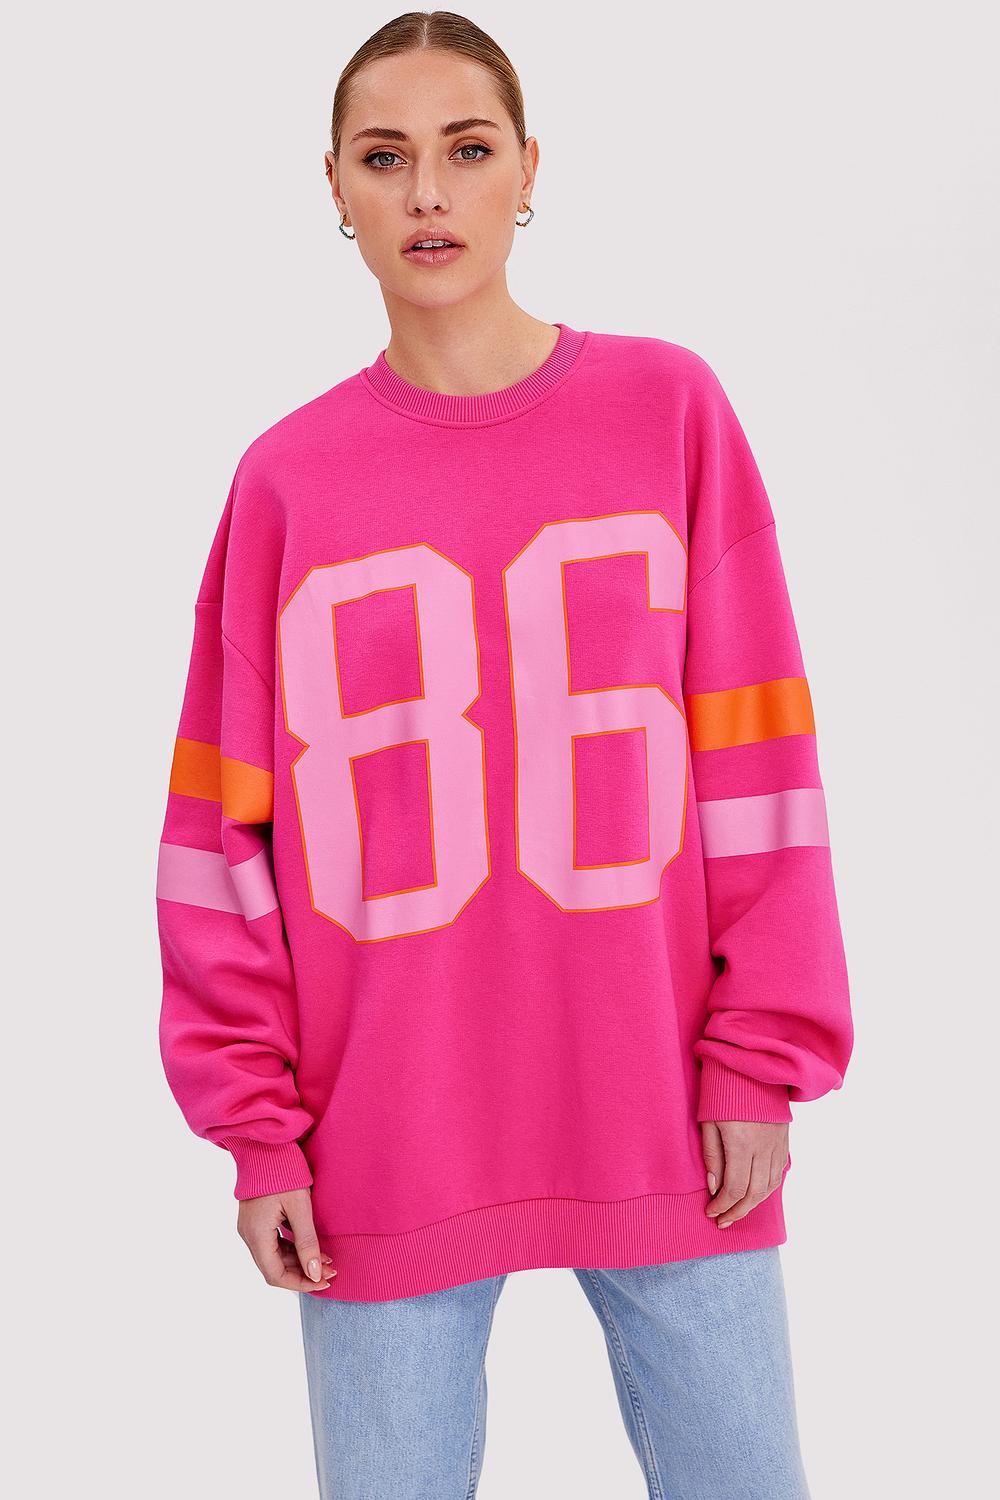 Roze oversized sweater